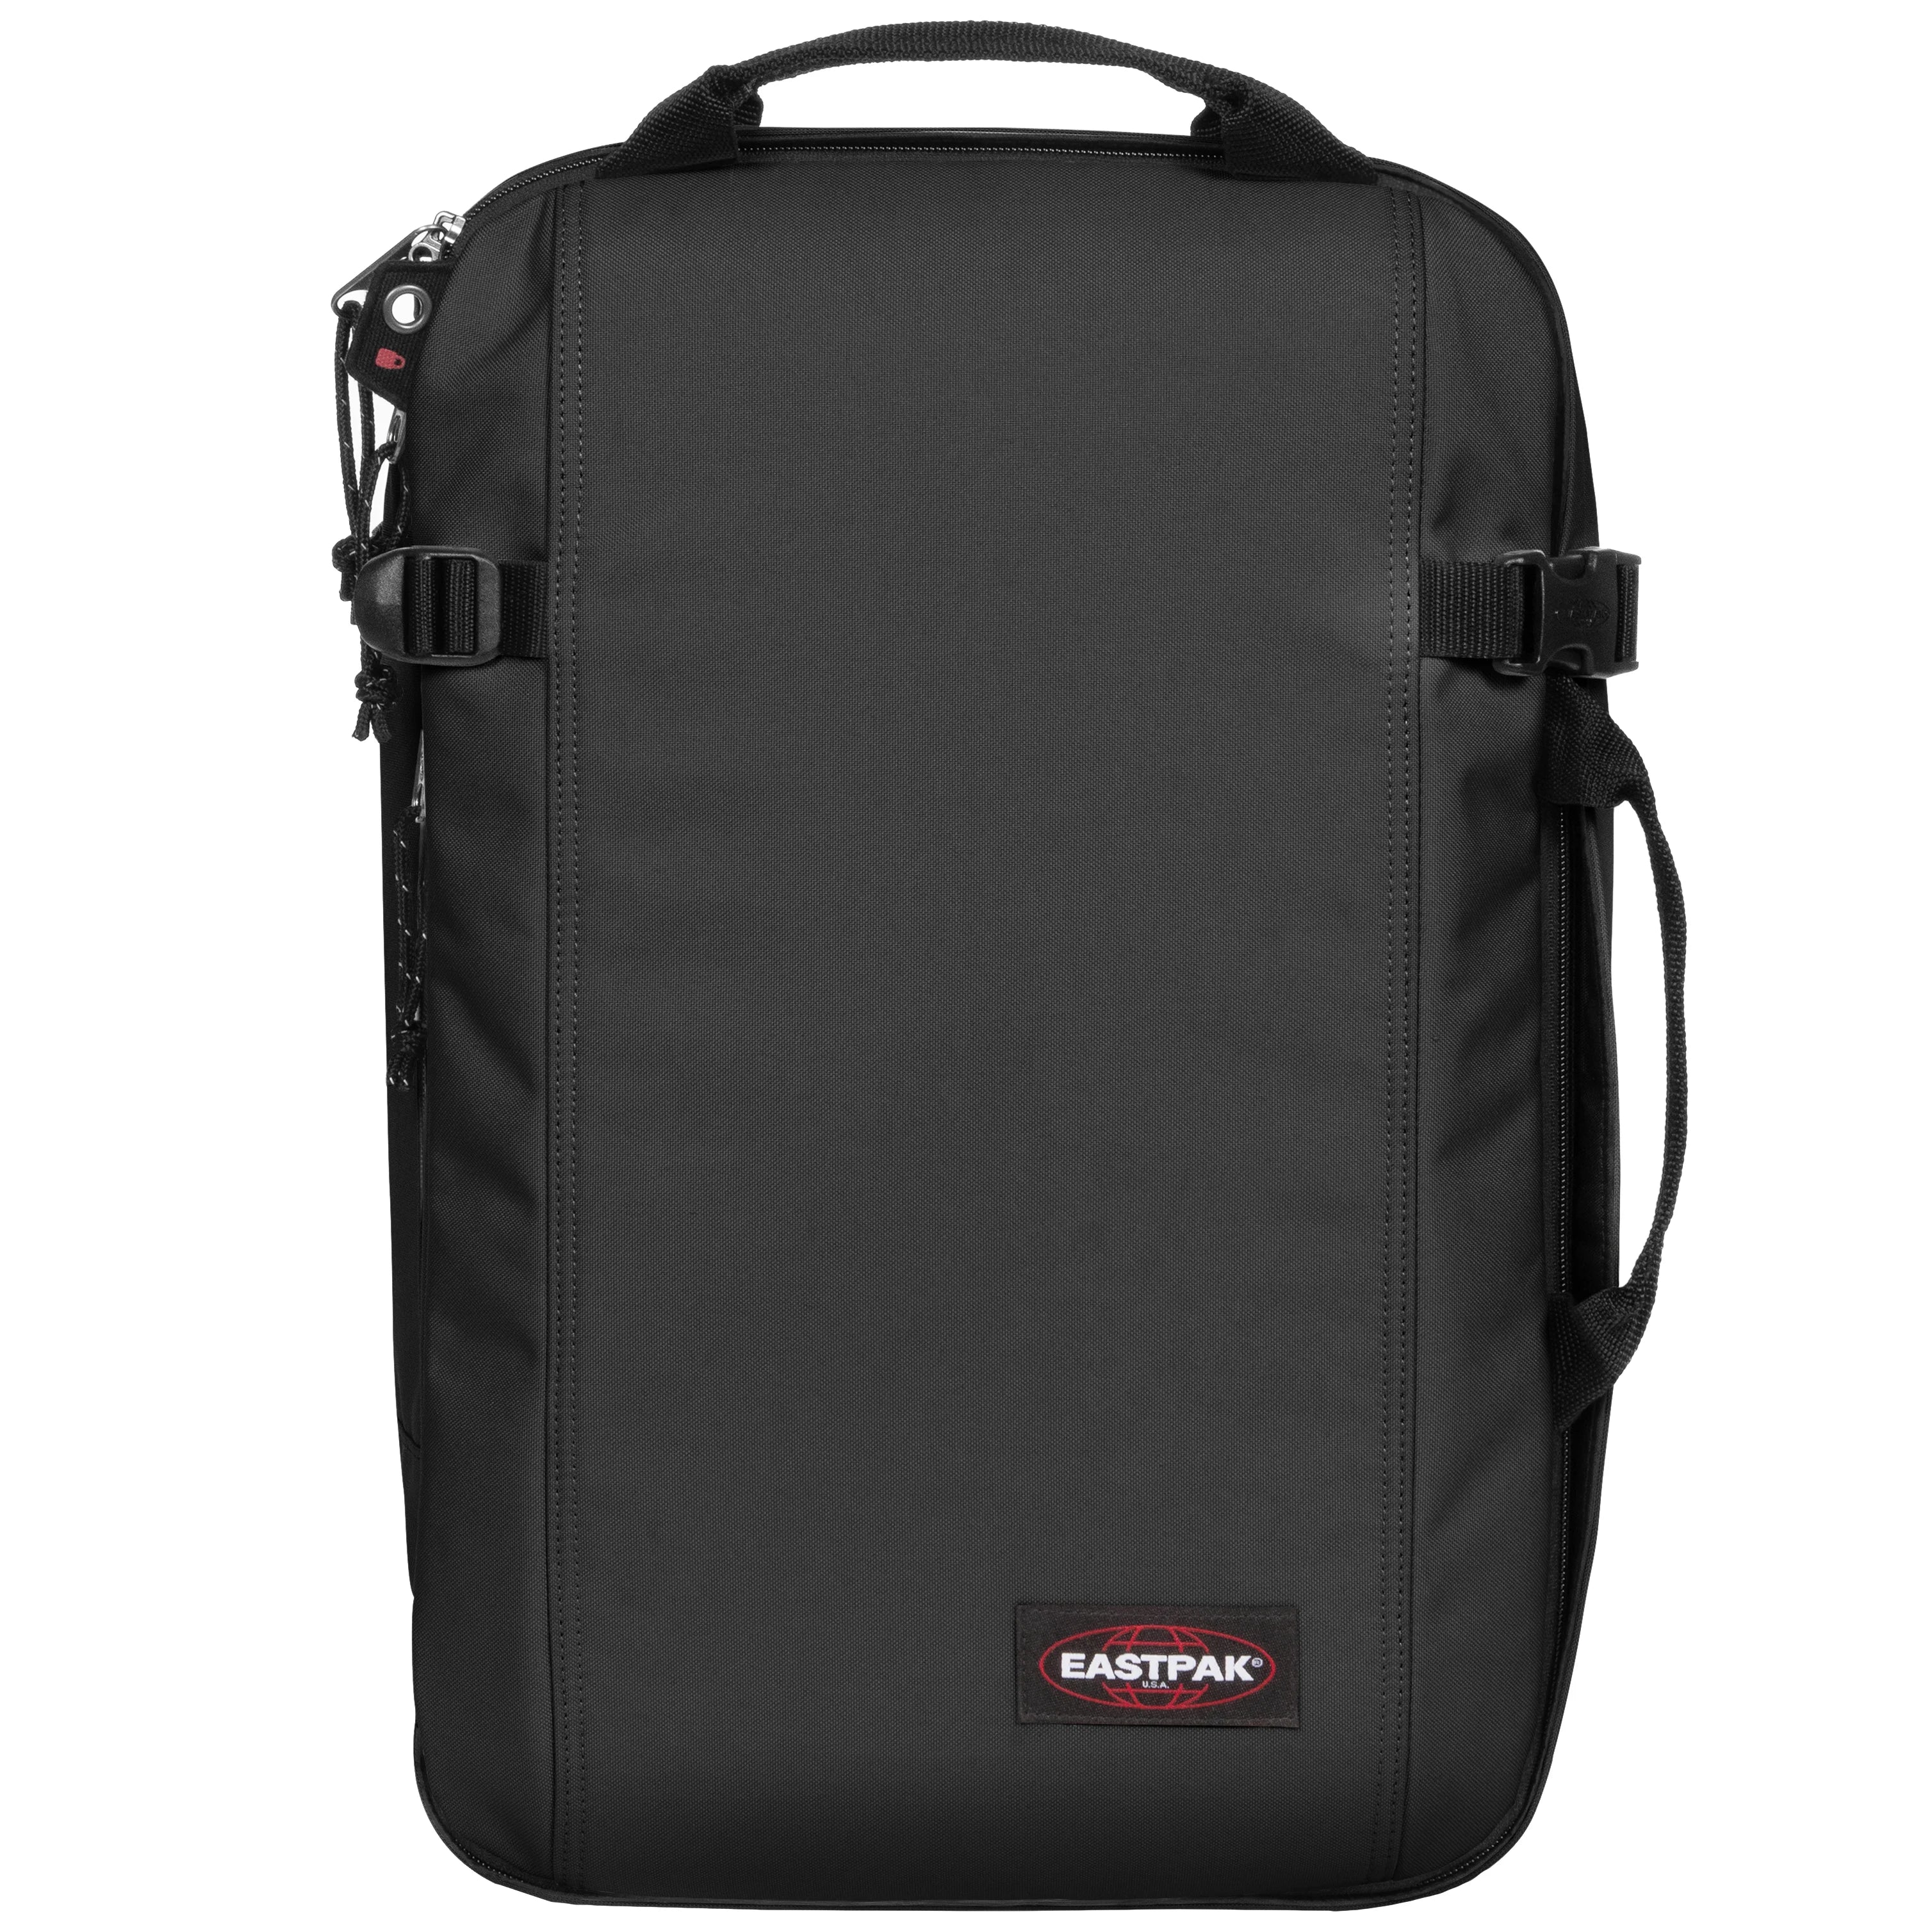 Eastpak Authentic Travel Morepack Rucksack 50 cm - Black